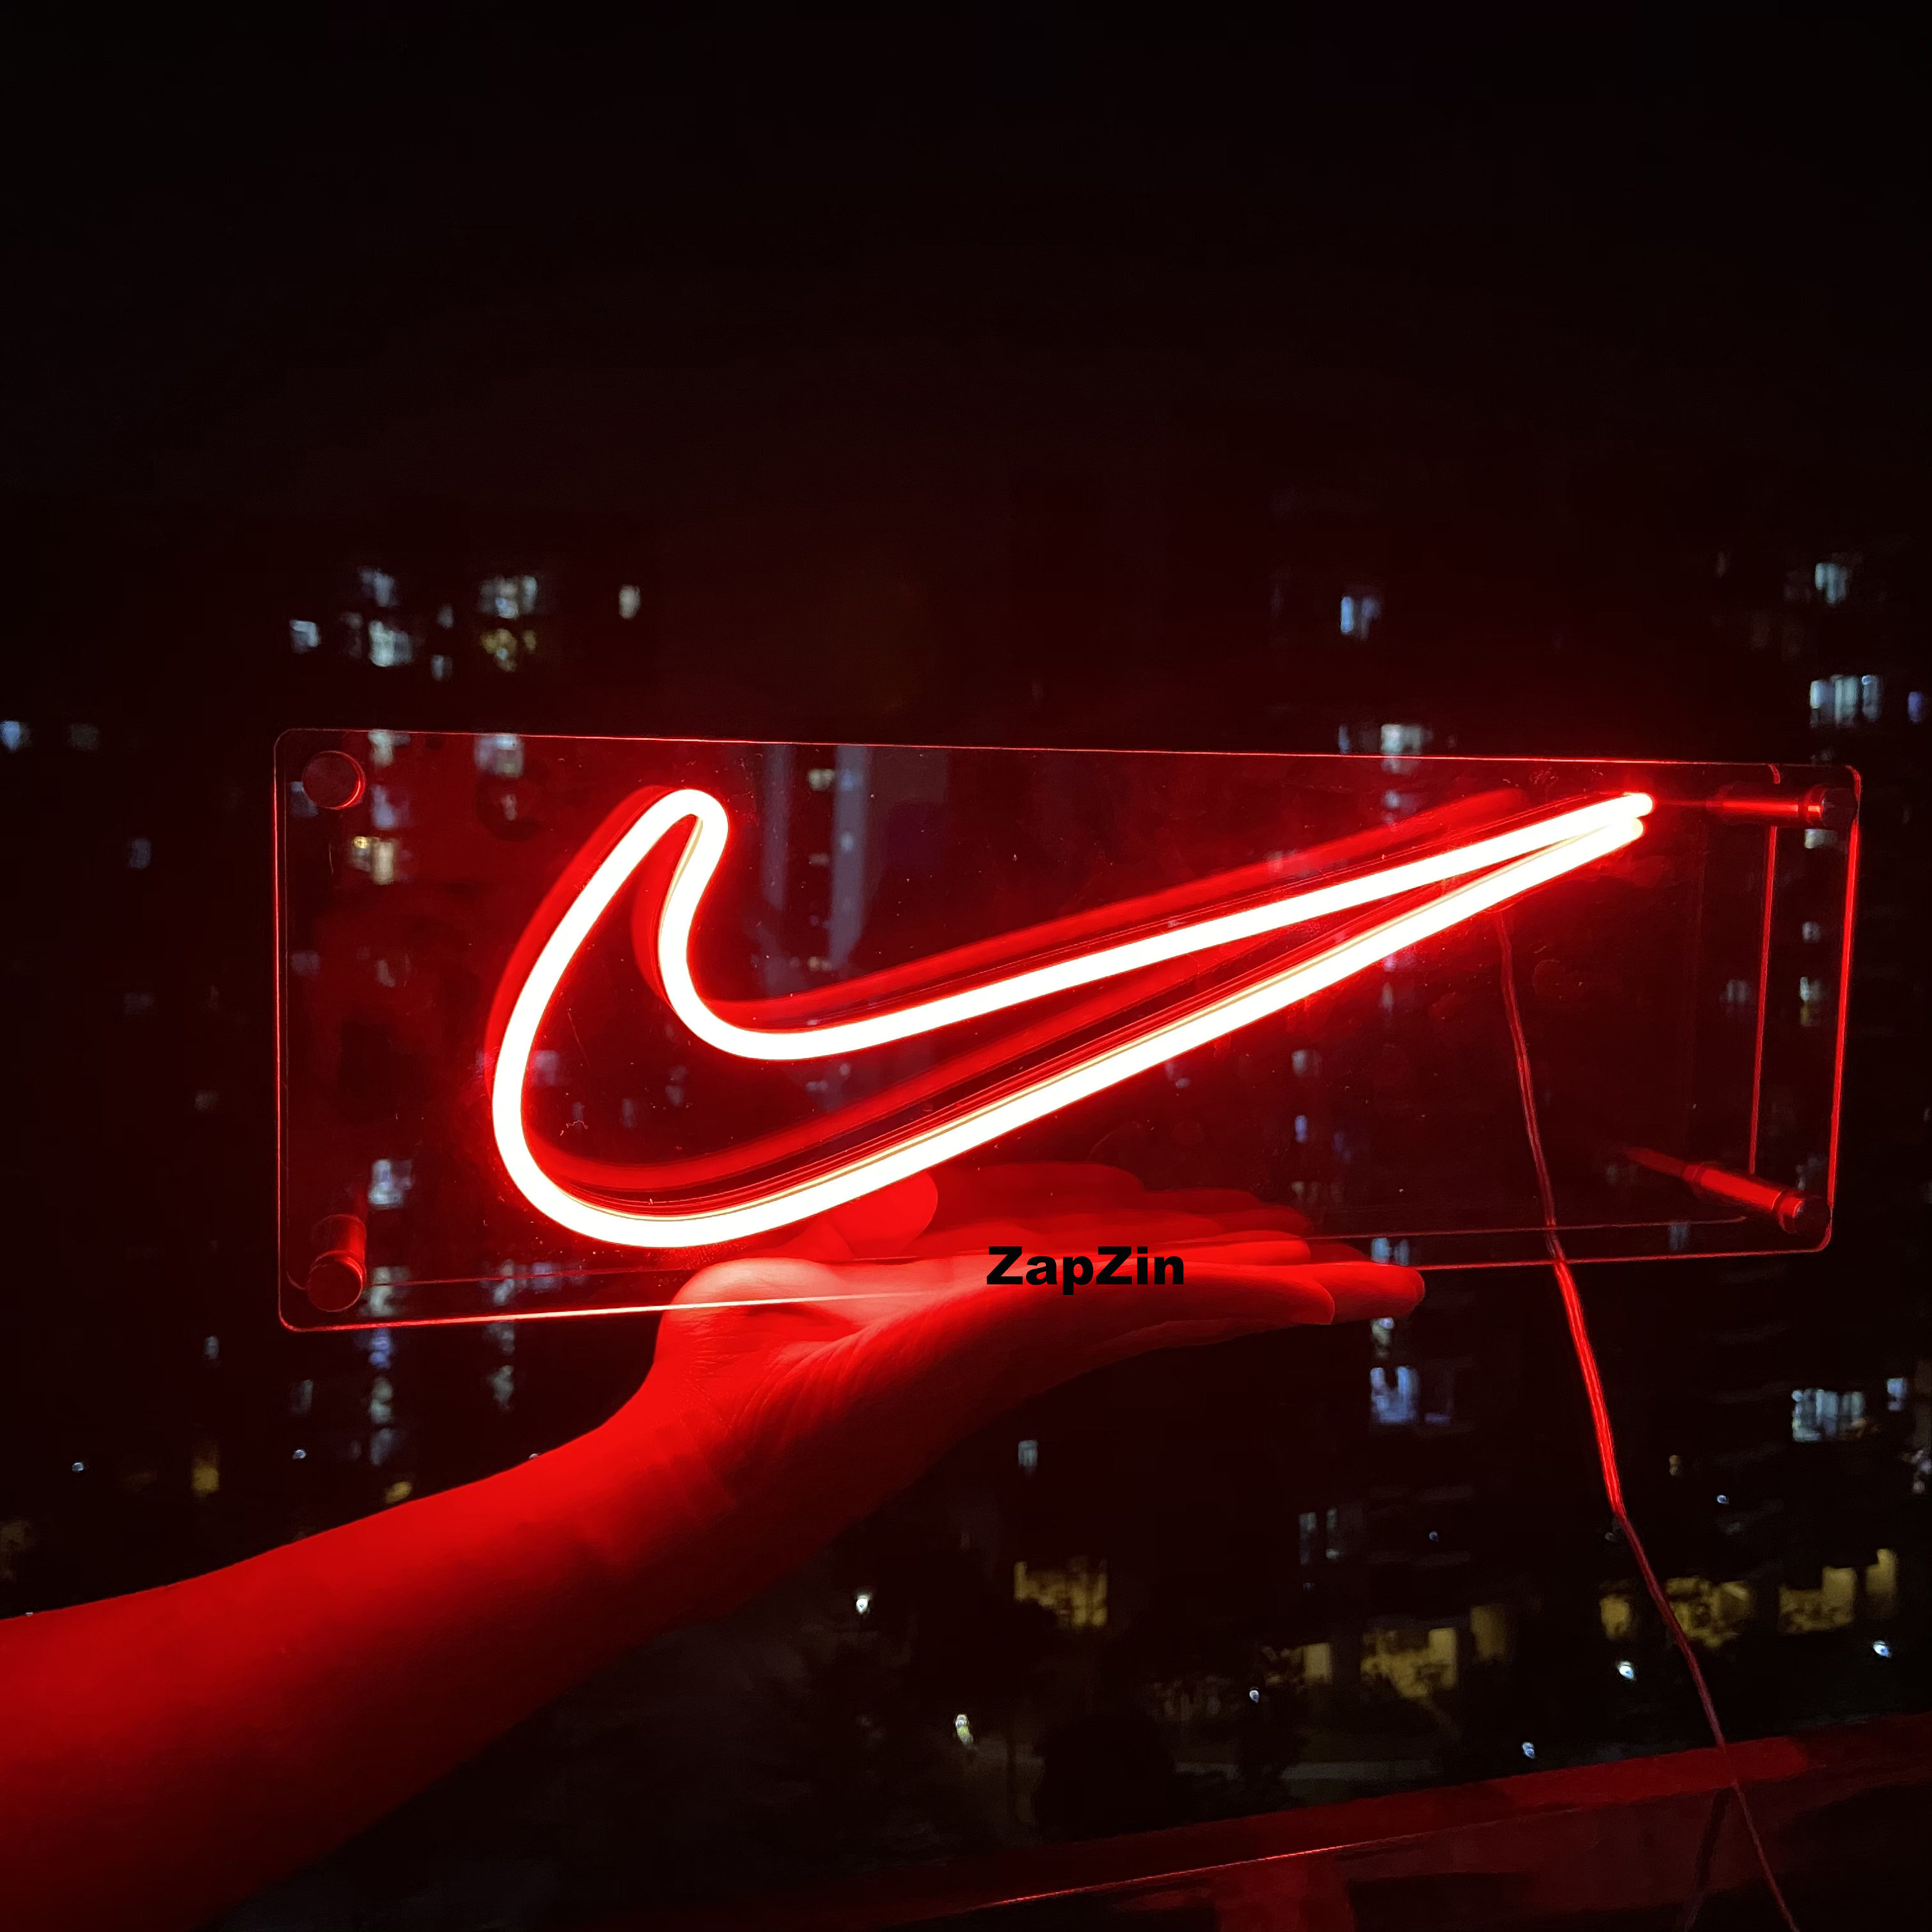 Nike Swoosh Logo Neon Led | canoeracing.org.uk